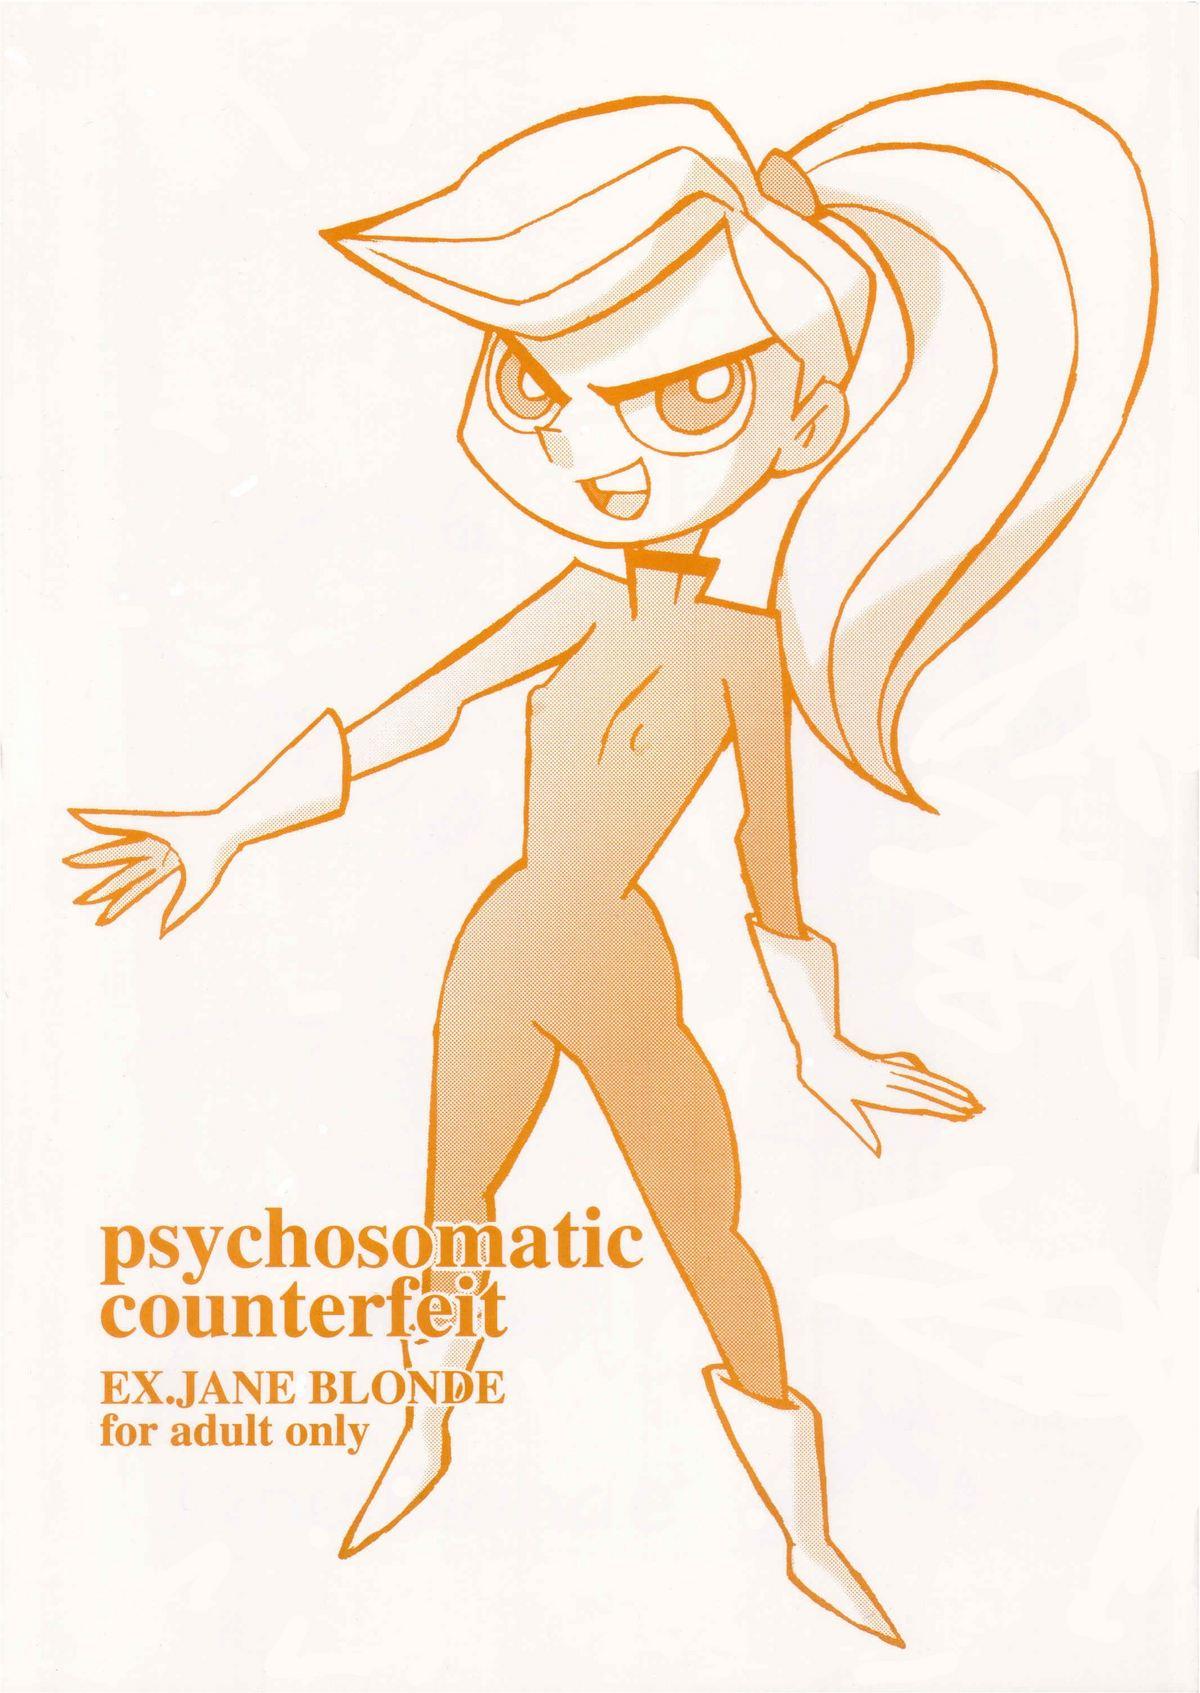 psychosomatic counterfeit EX.JANE BLONDE 0